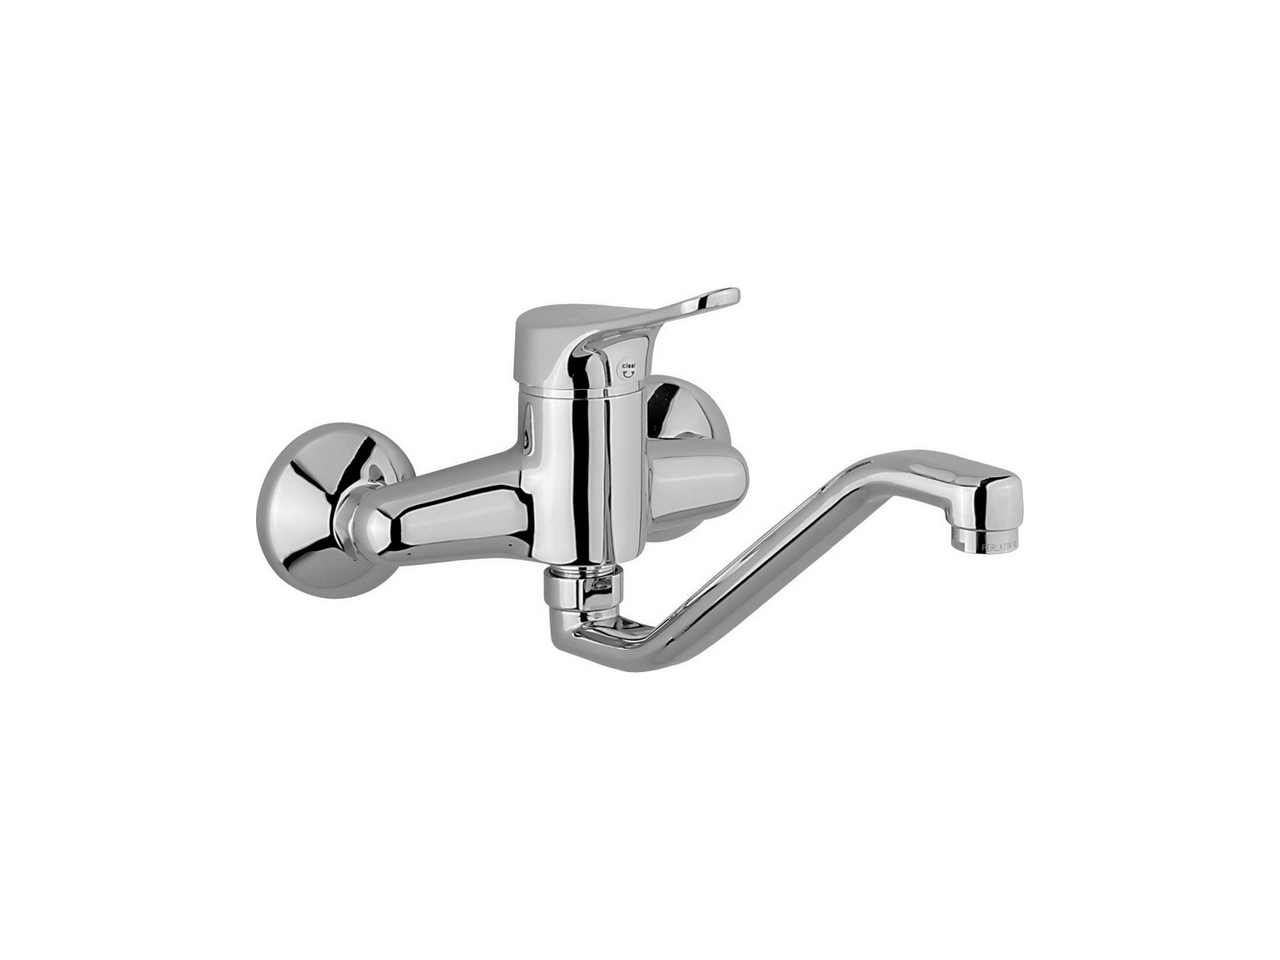 CisalExposed single lever sink mixer KITCHEN_FU000430